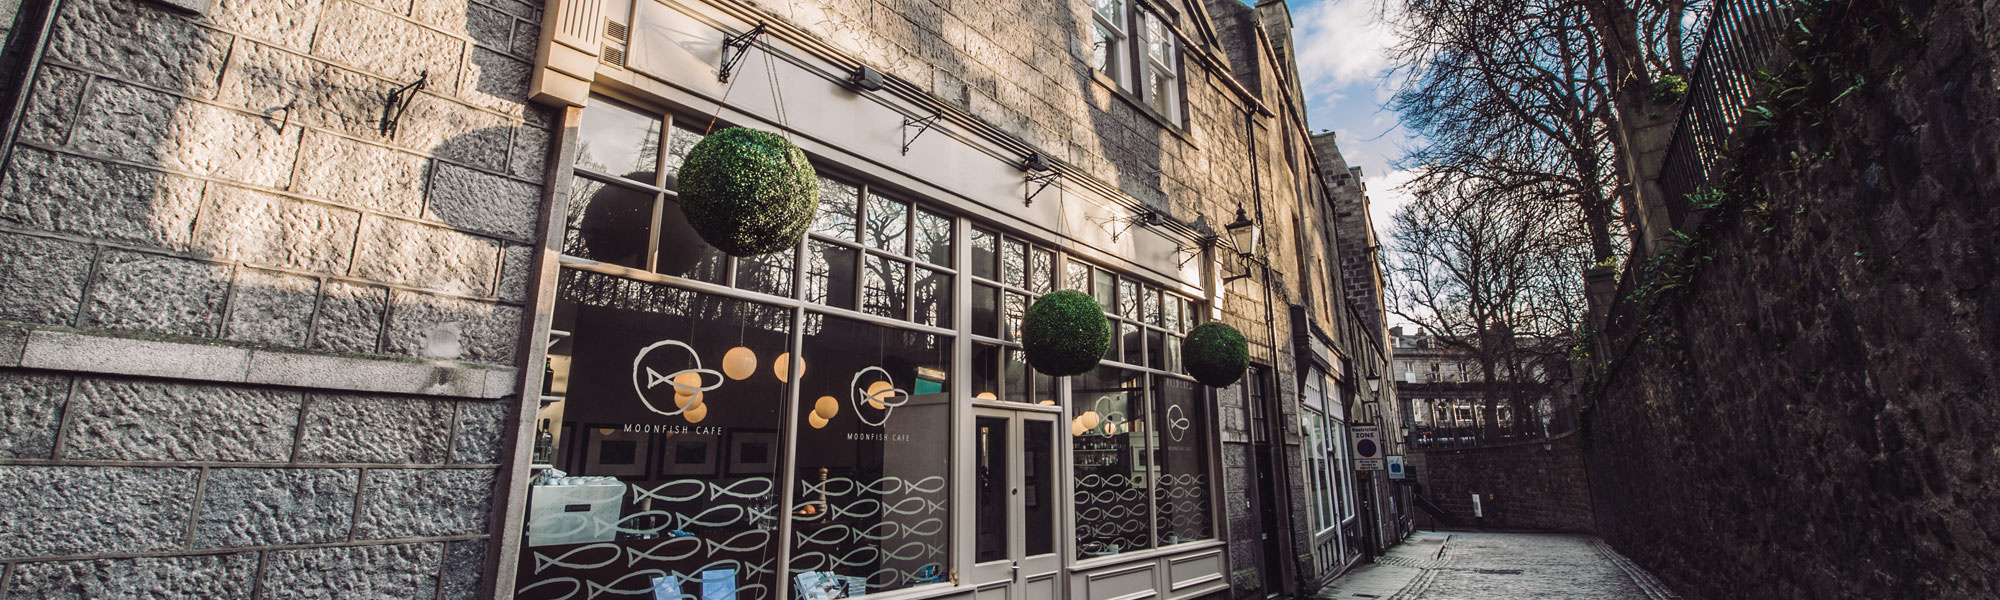 Moonfish cafe Aberdeen | City centre fish restaurant